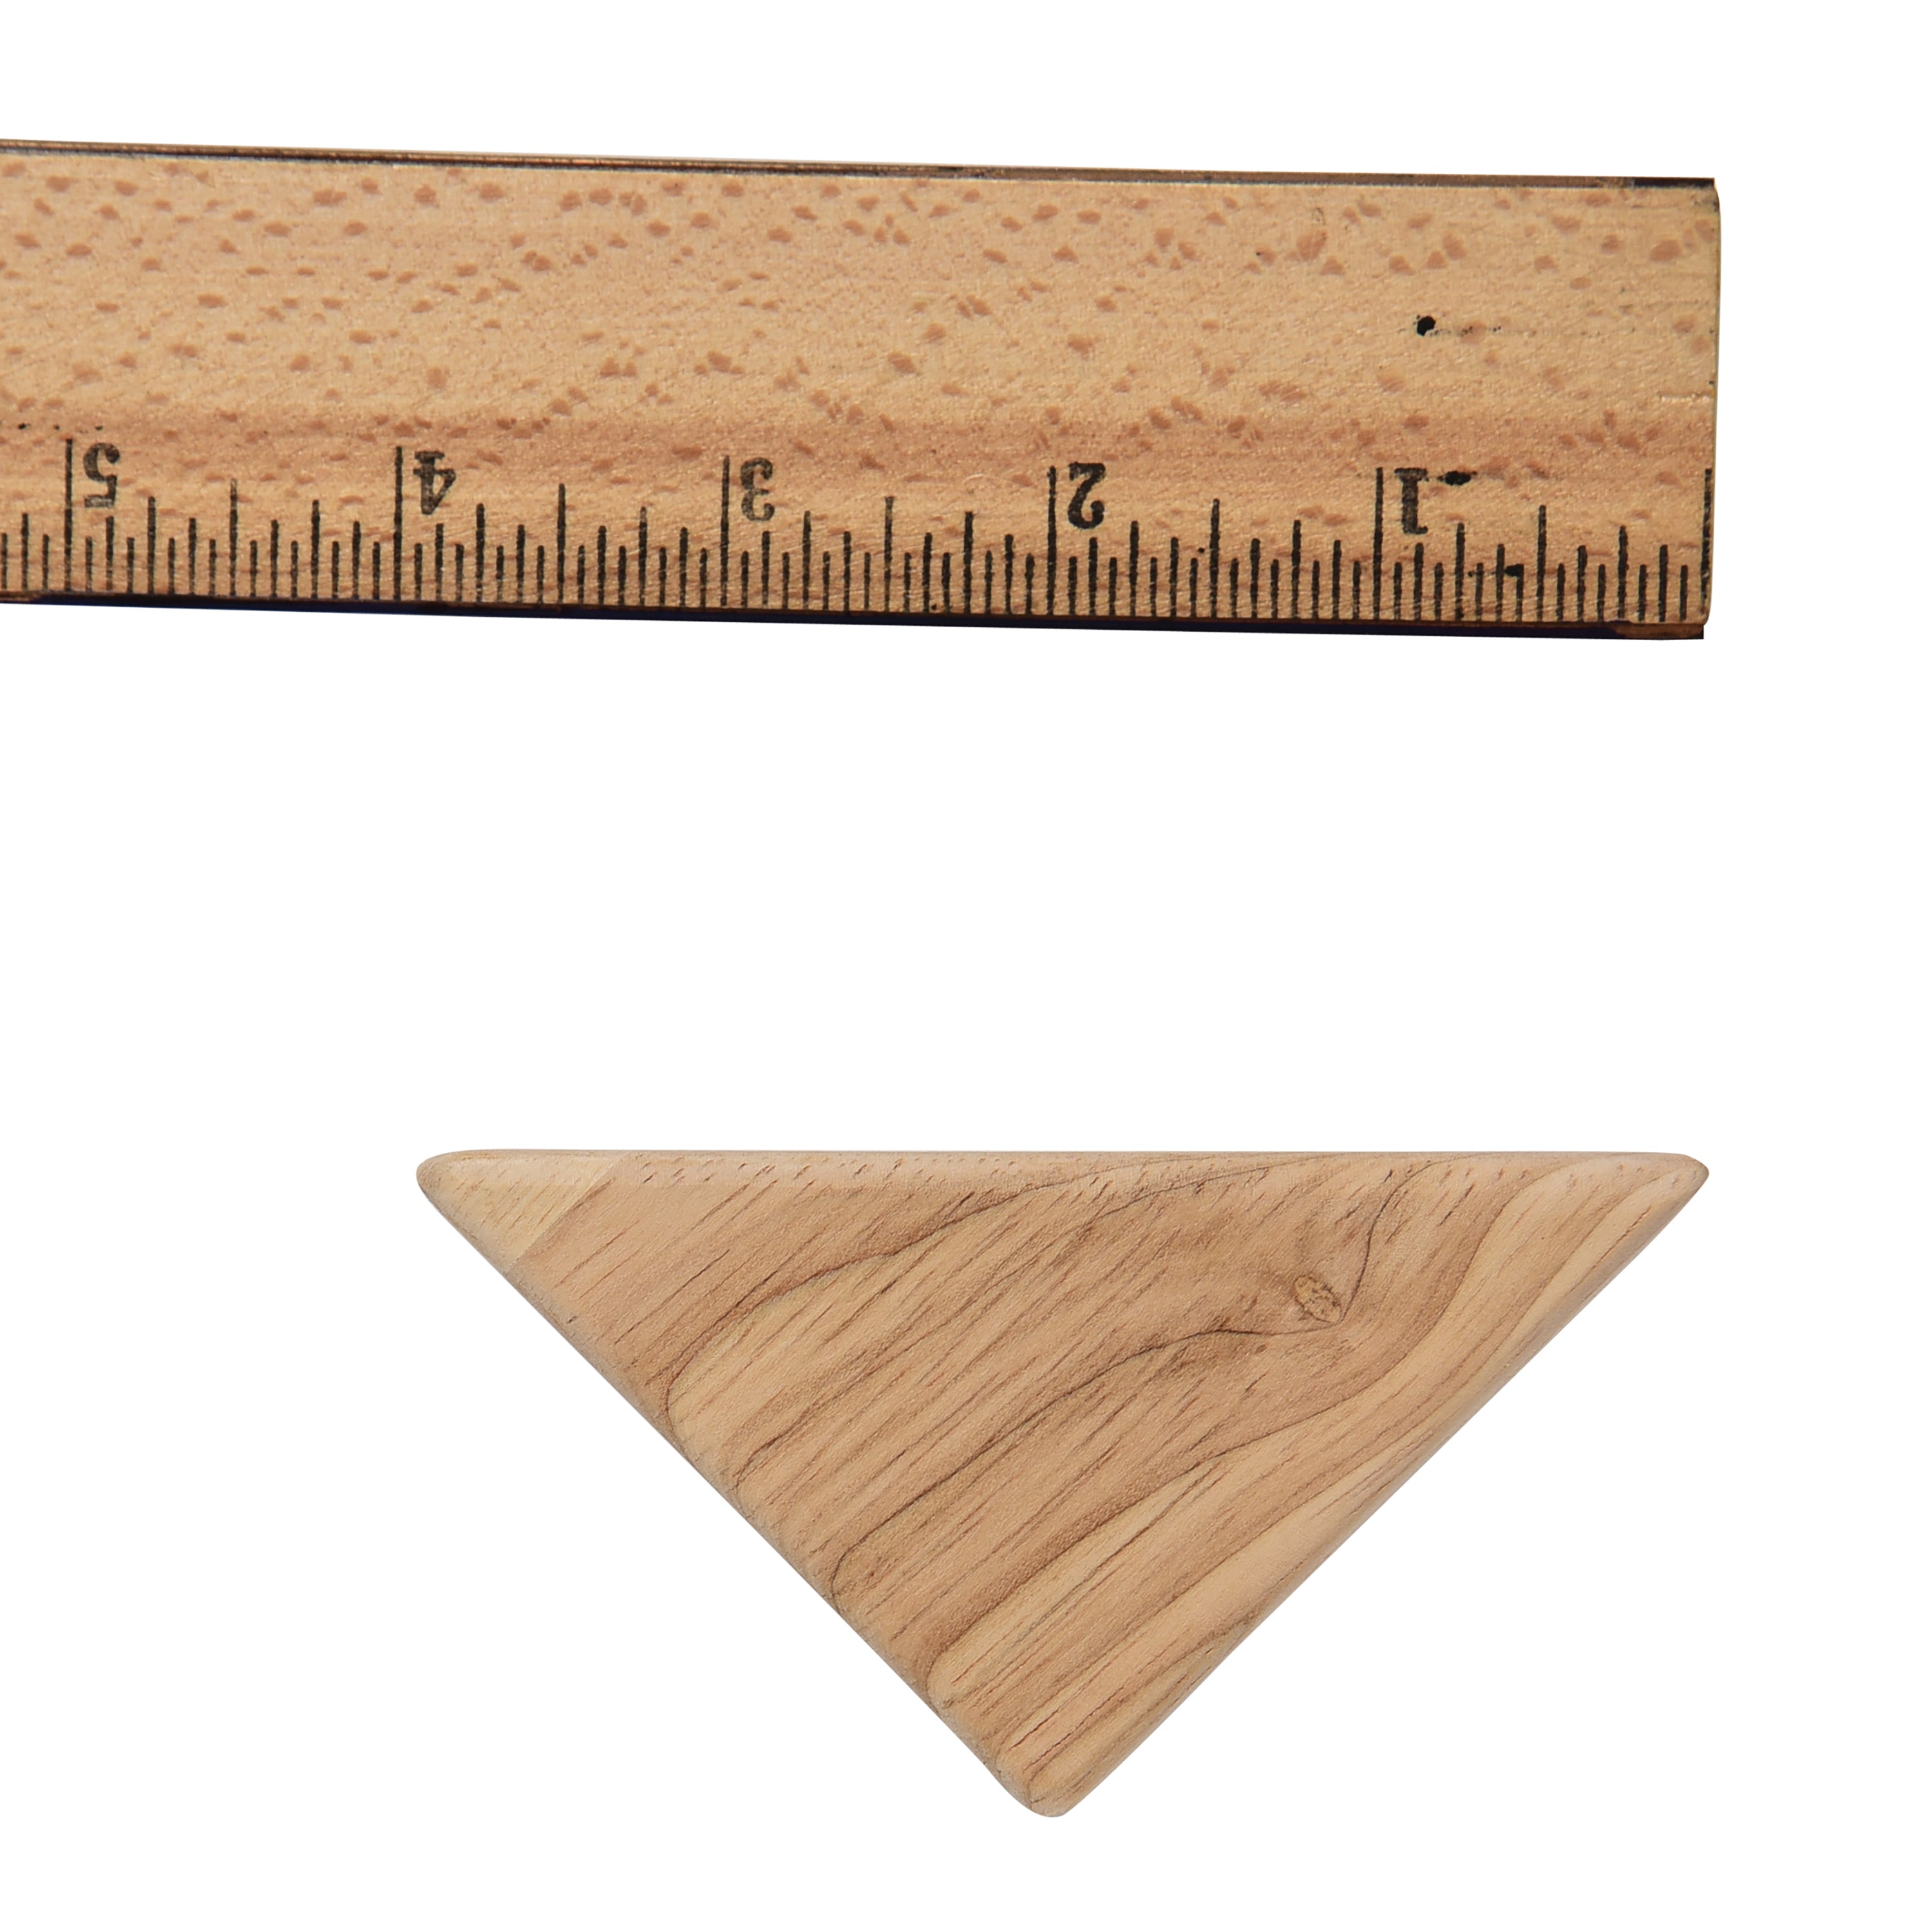 Wood Unit Blocks: Small Triangle Block (Isosceles Triangle)